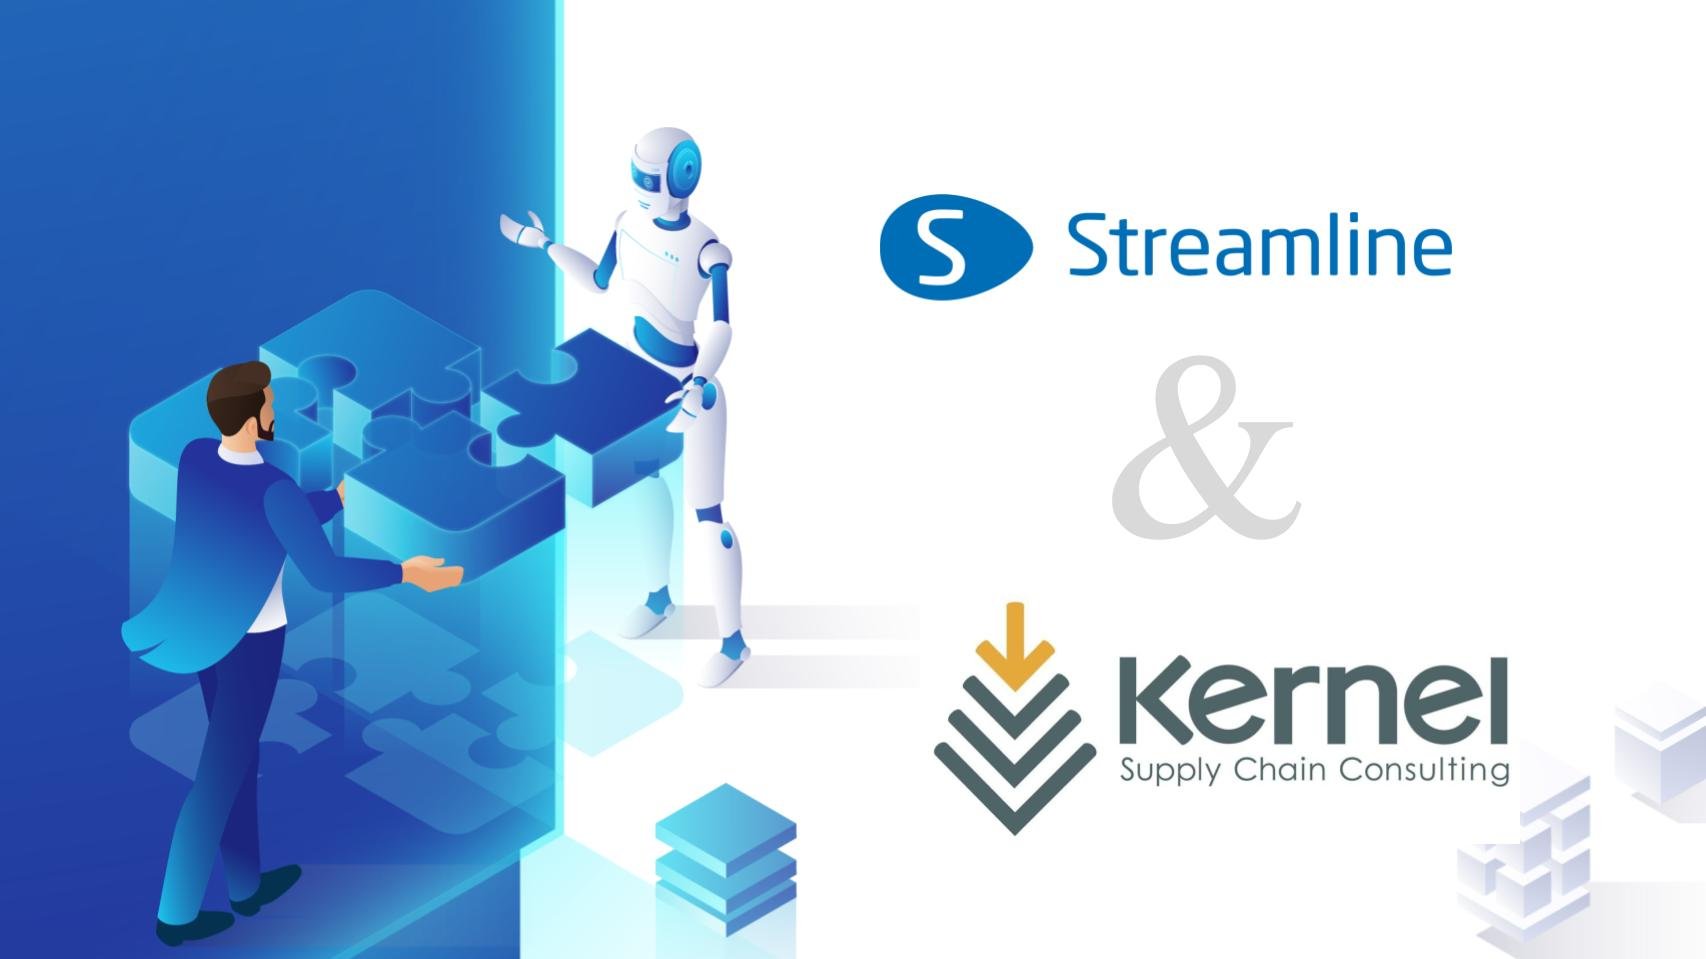 GMDH Streamline 和 Kernel Supply Chain Consulting 宣佈建立有價值的合作夥伴關係